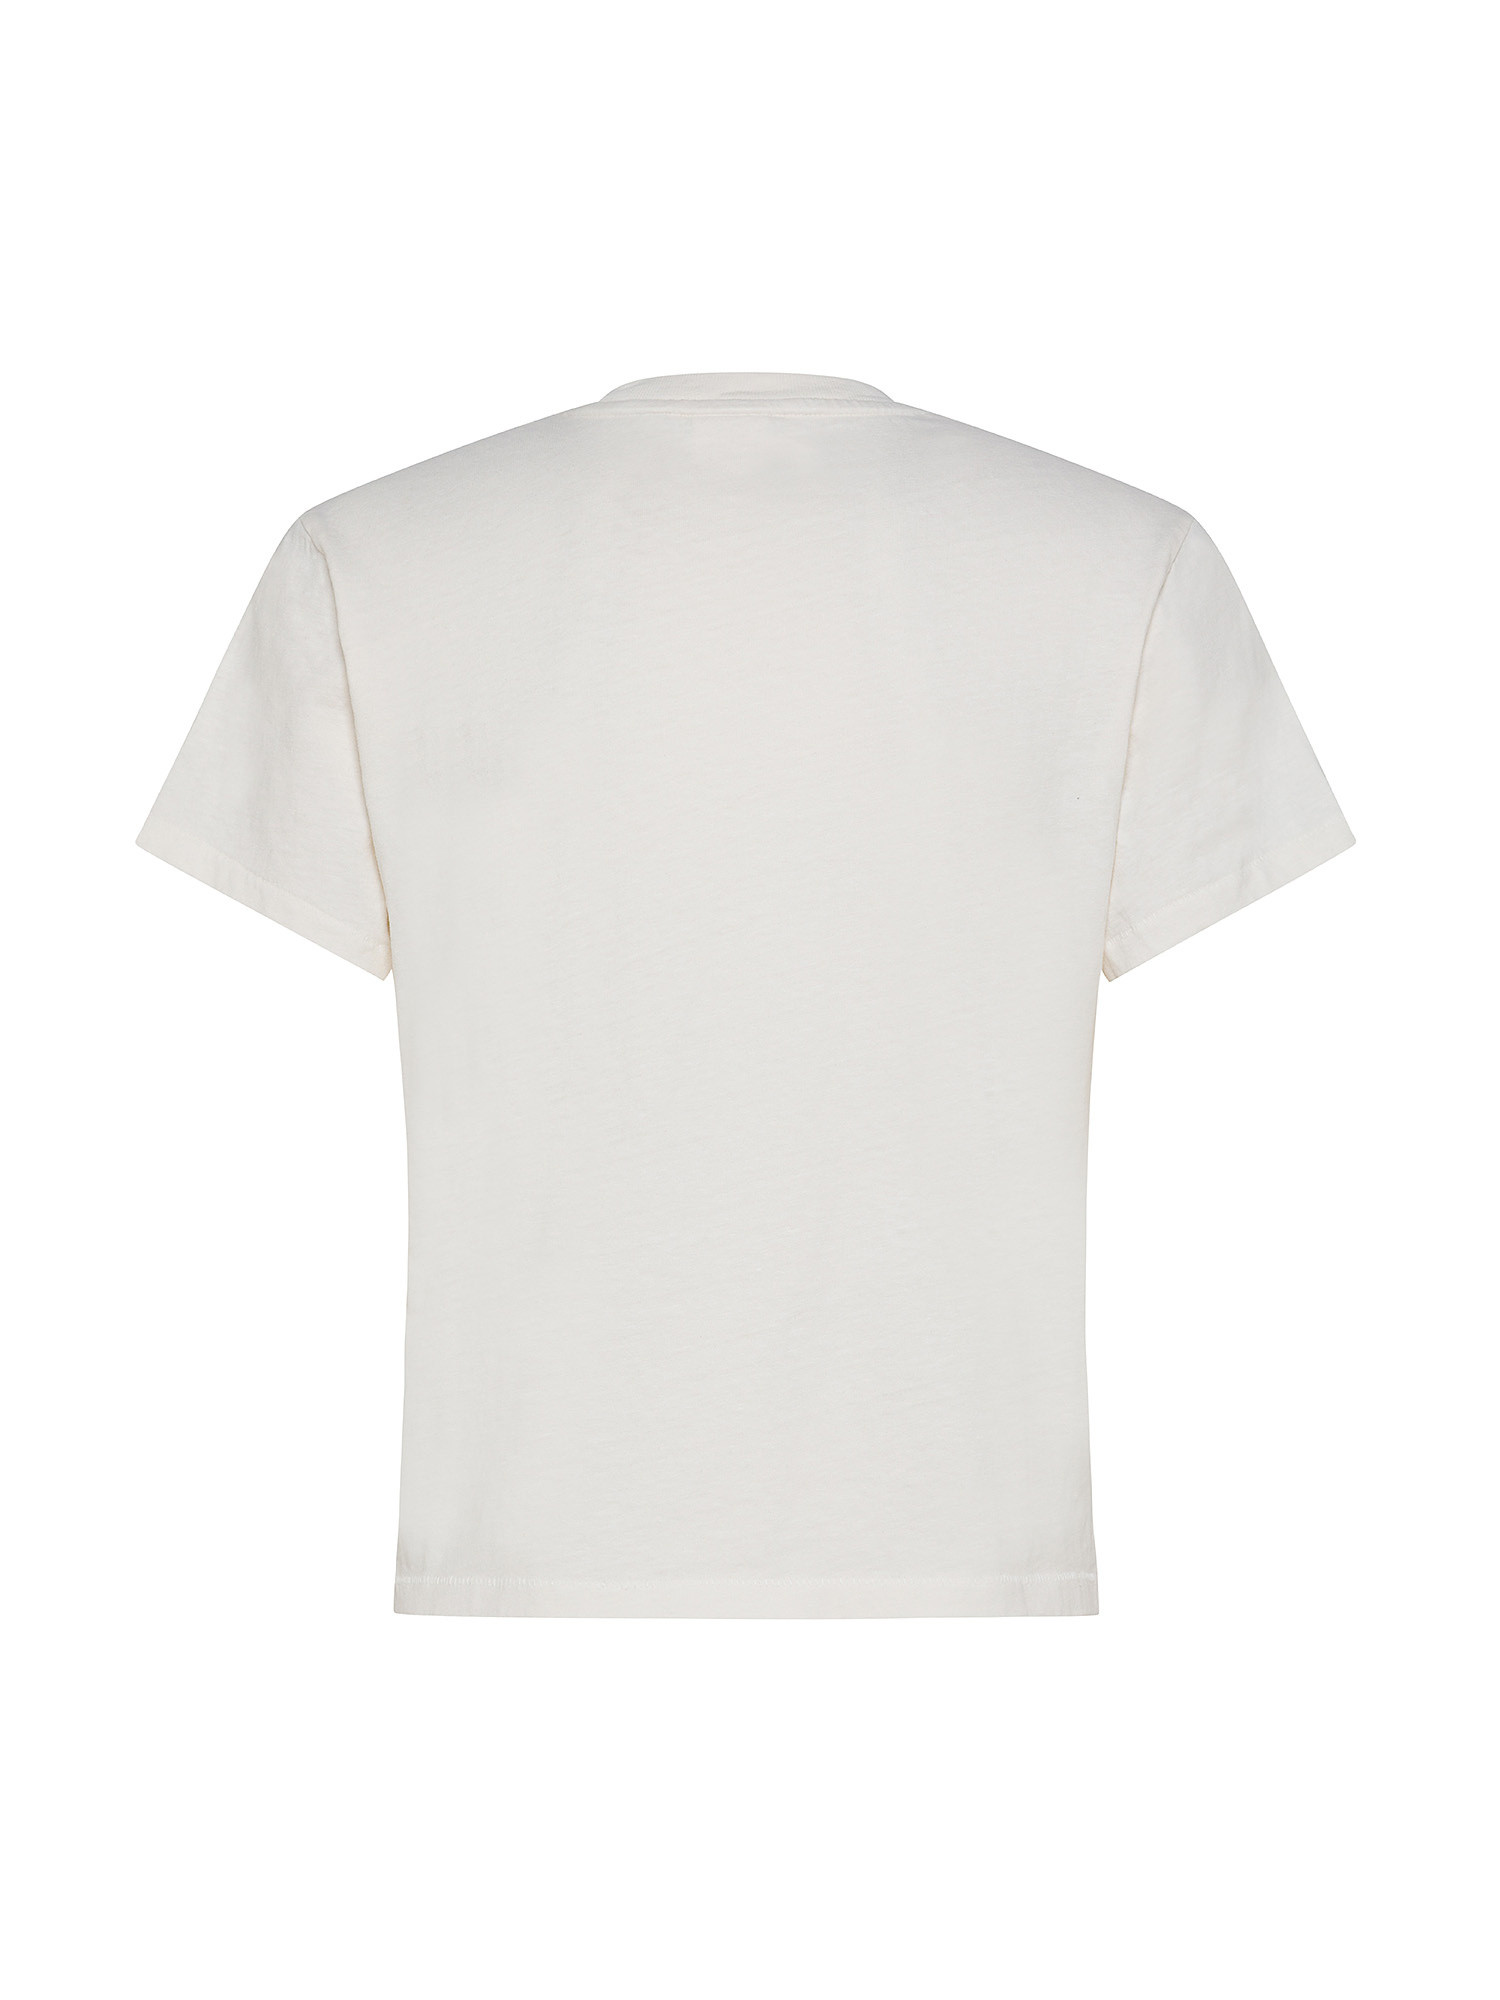 Levi's - T-shirt classic fit, Bianco, large image number 1